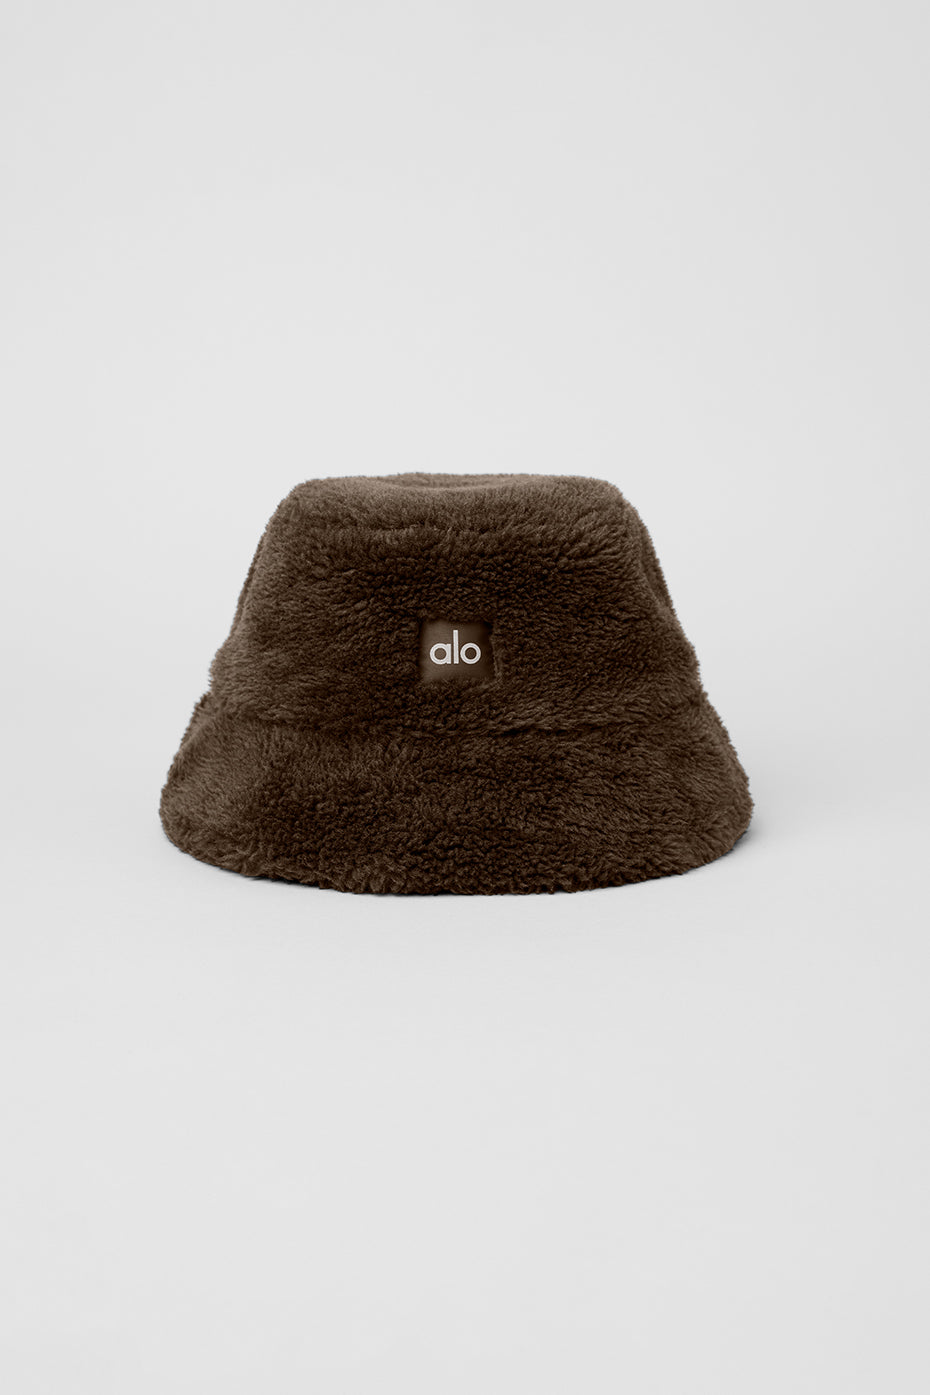 - Yoga Sherpa Bucket | Foxy Espresso Alo Hat